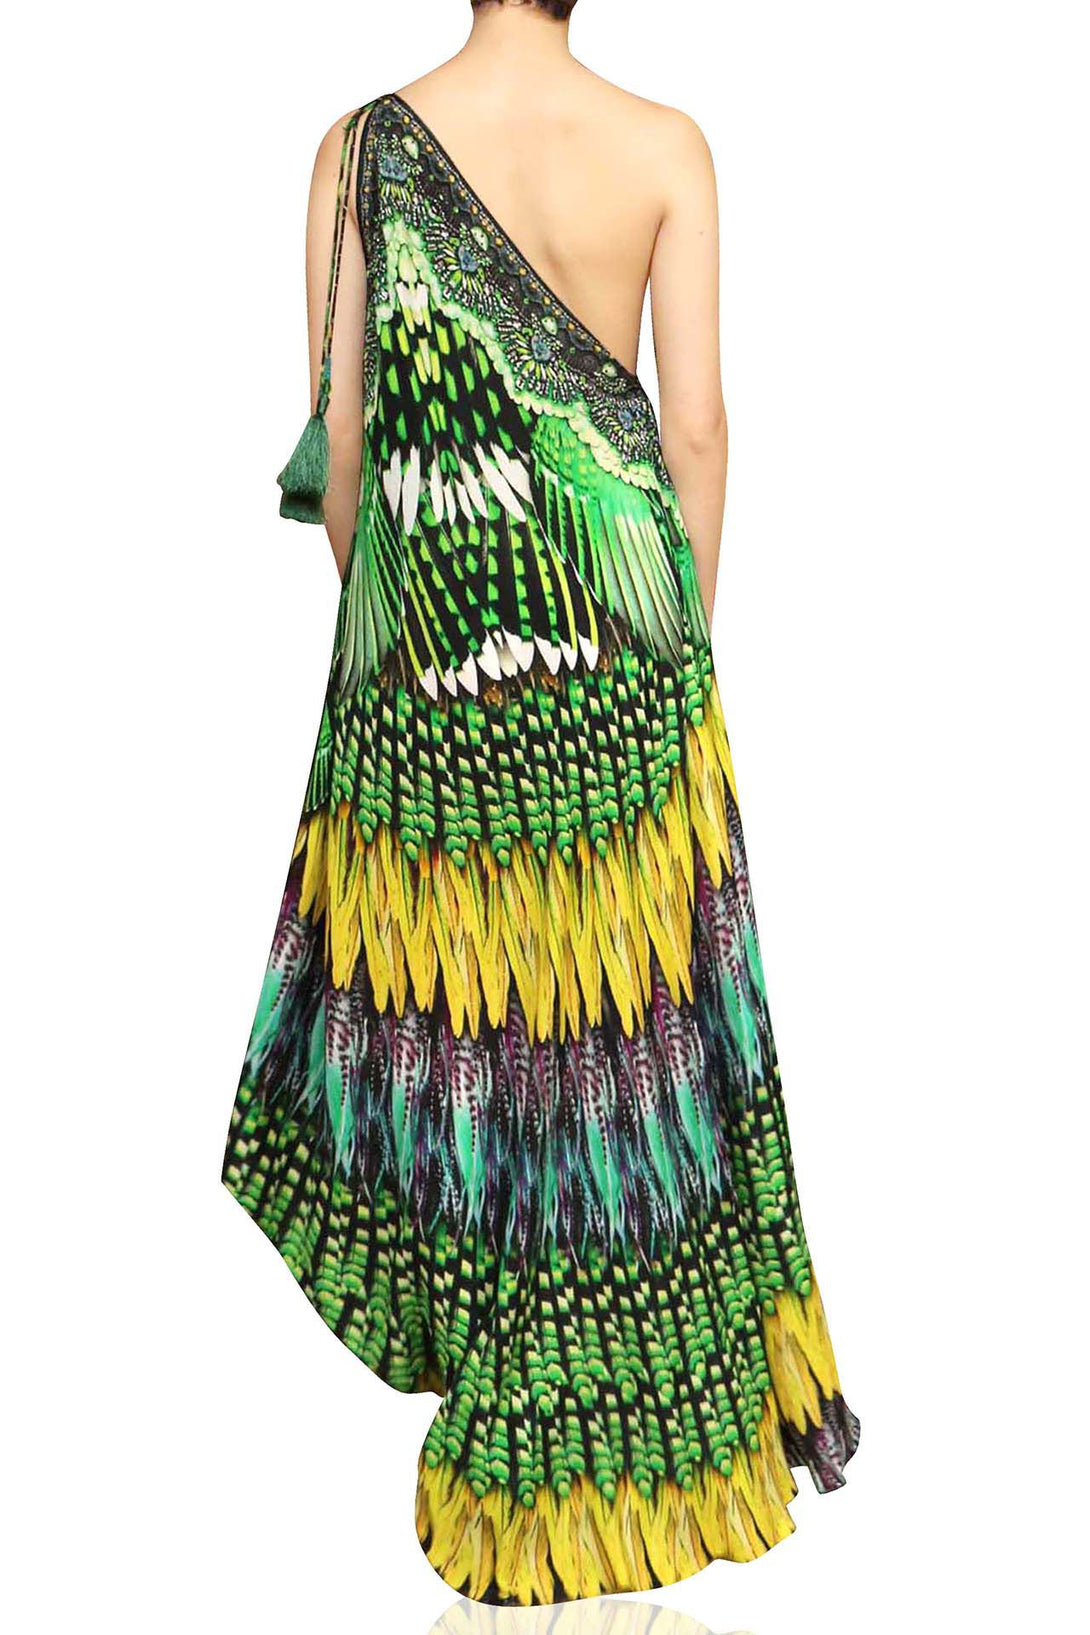  green dress for women, formal dresses for women, Shahida Parides, plunging neckline cocktail dress,